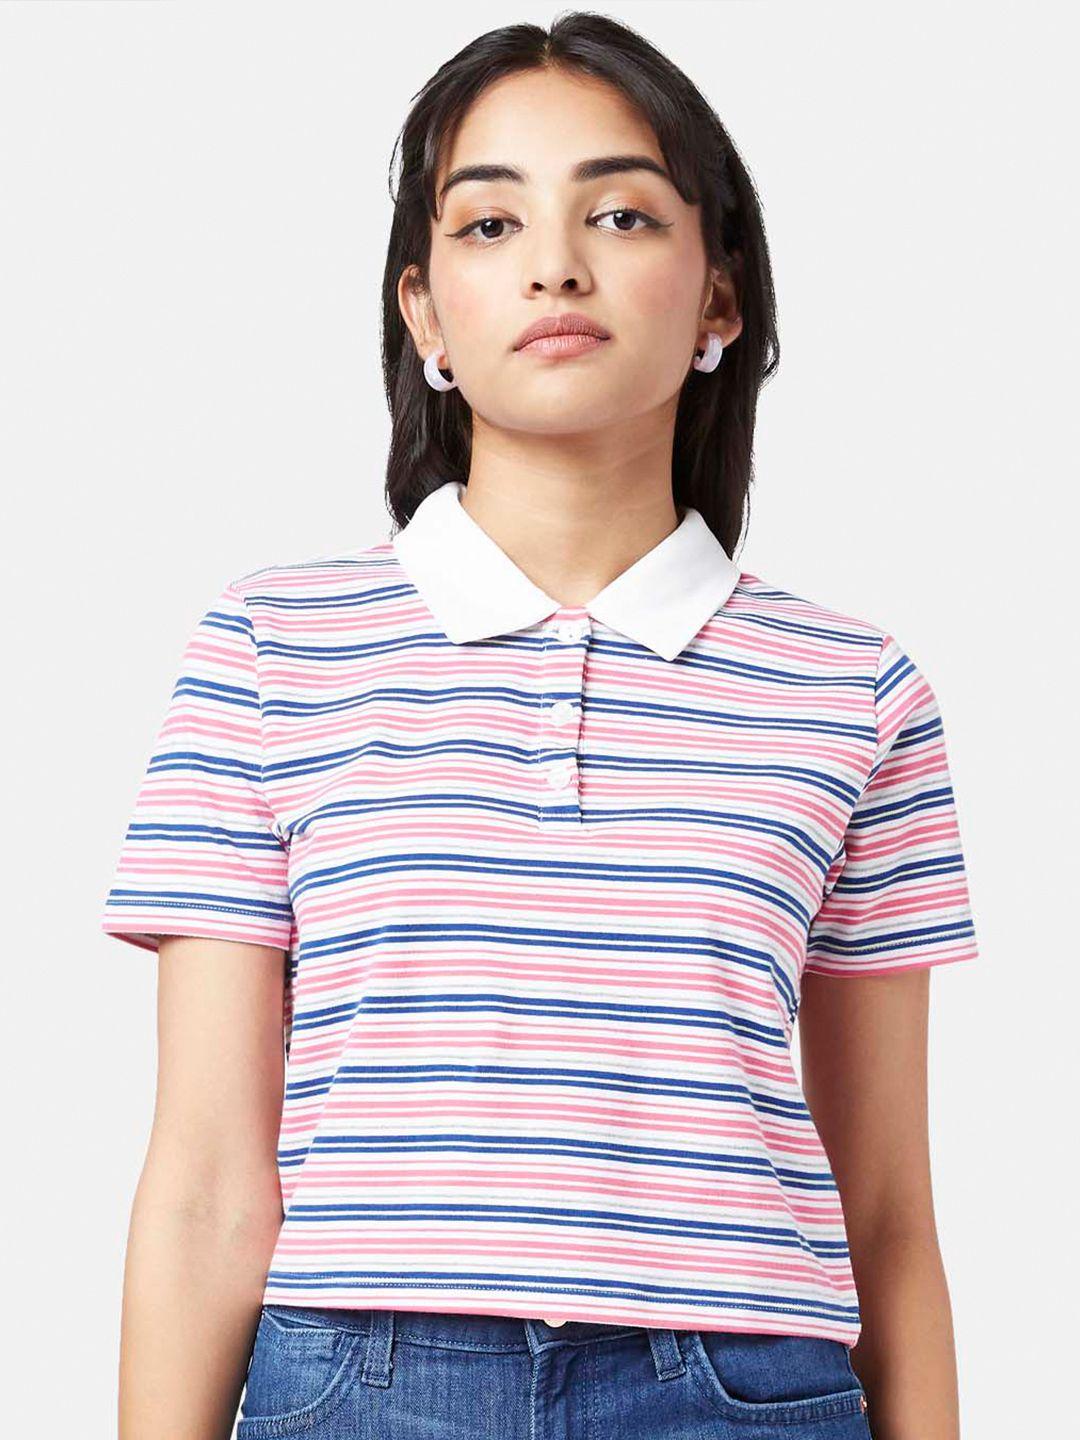 yu by pantaloons horizontal striped shirt